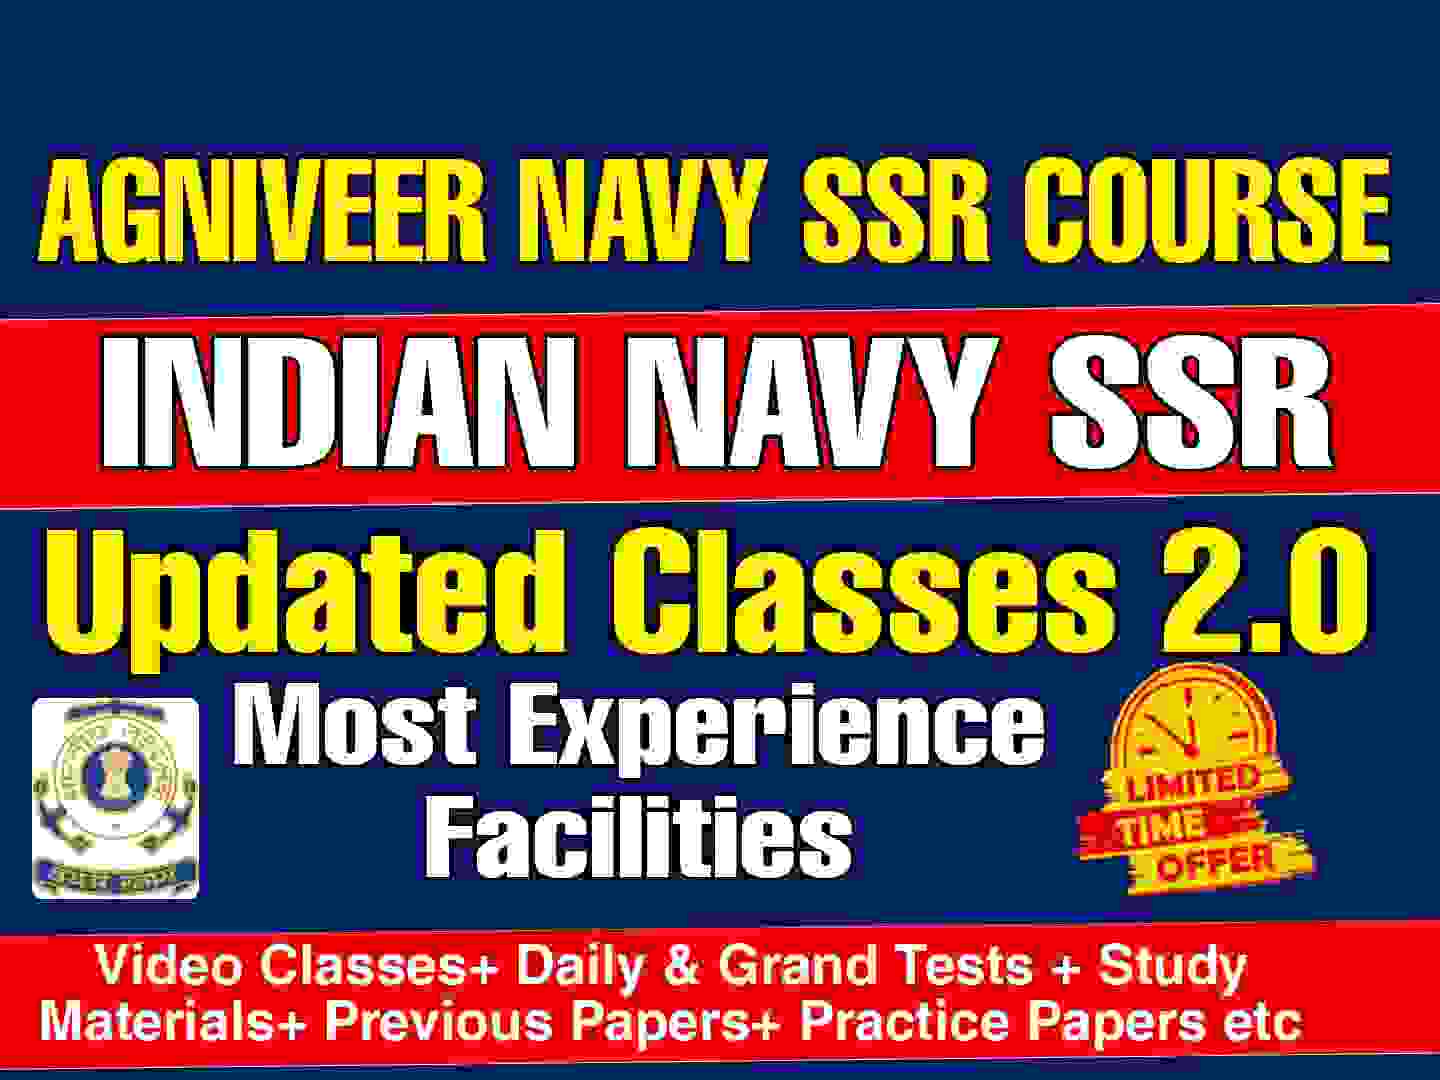 Navy SSR Best Online Coaching